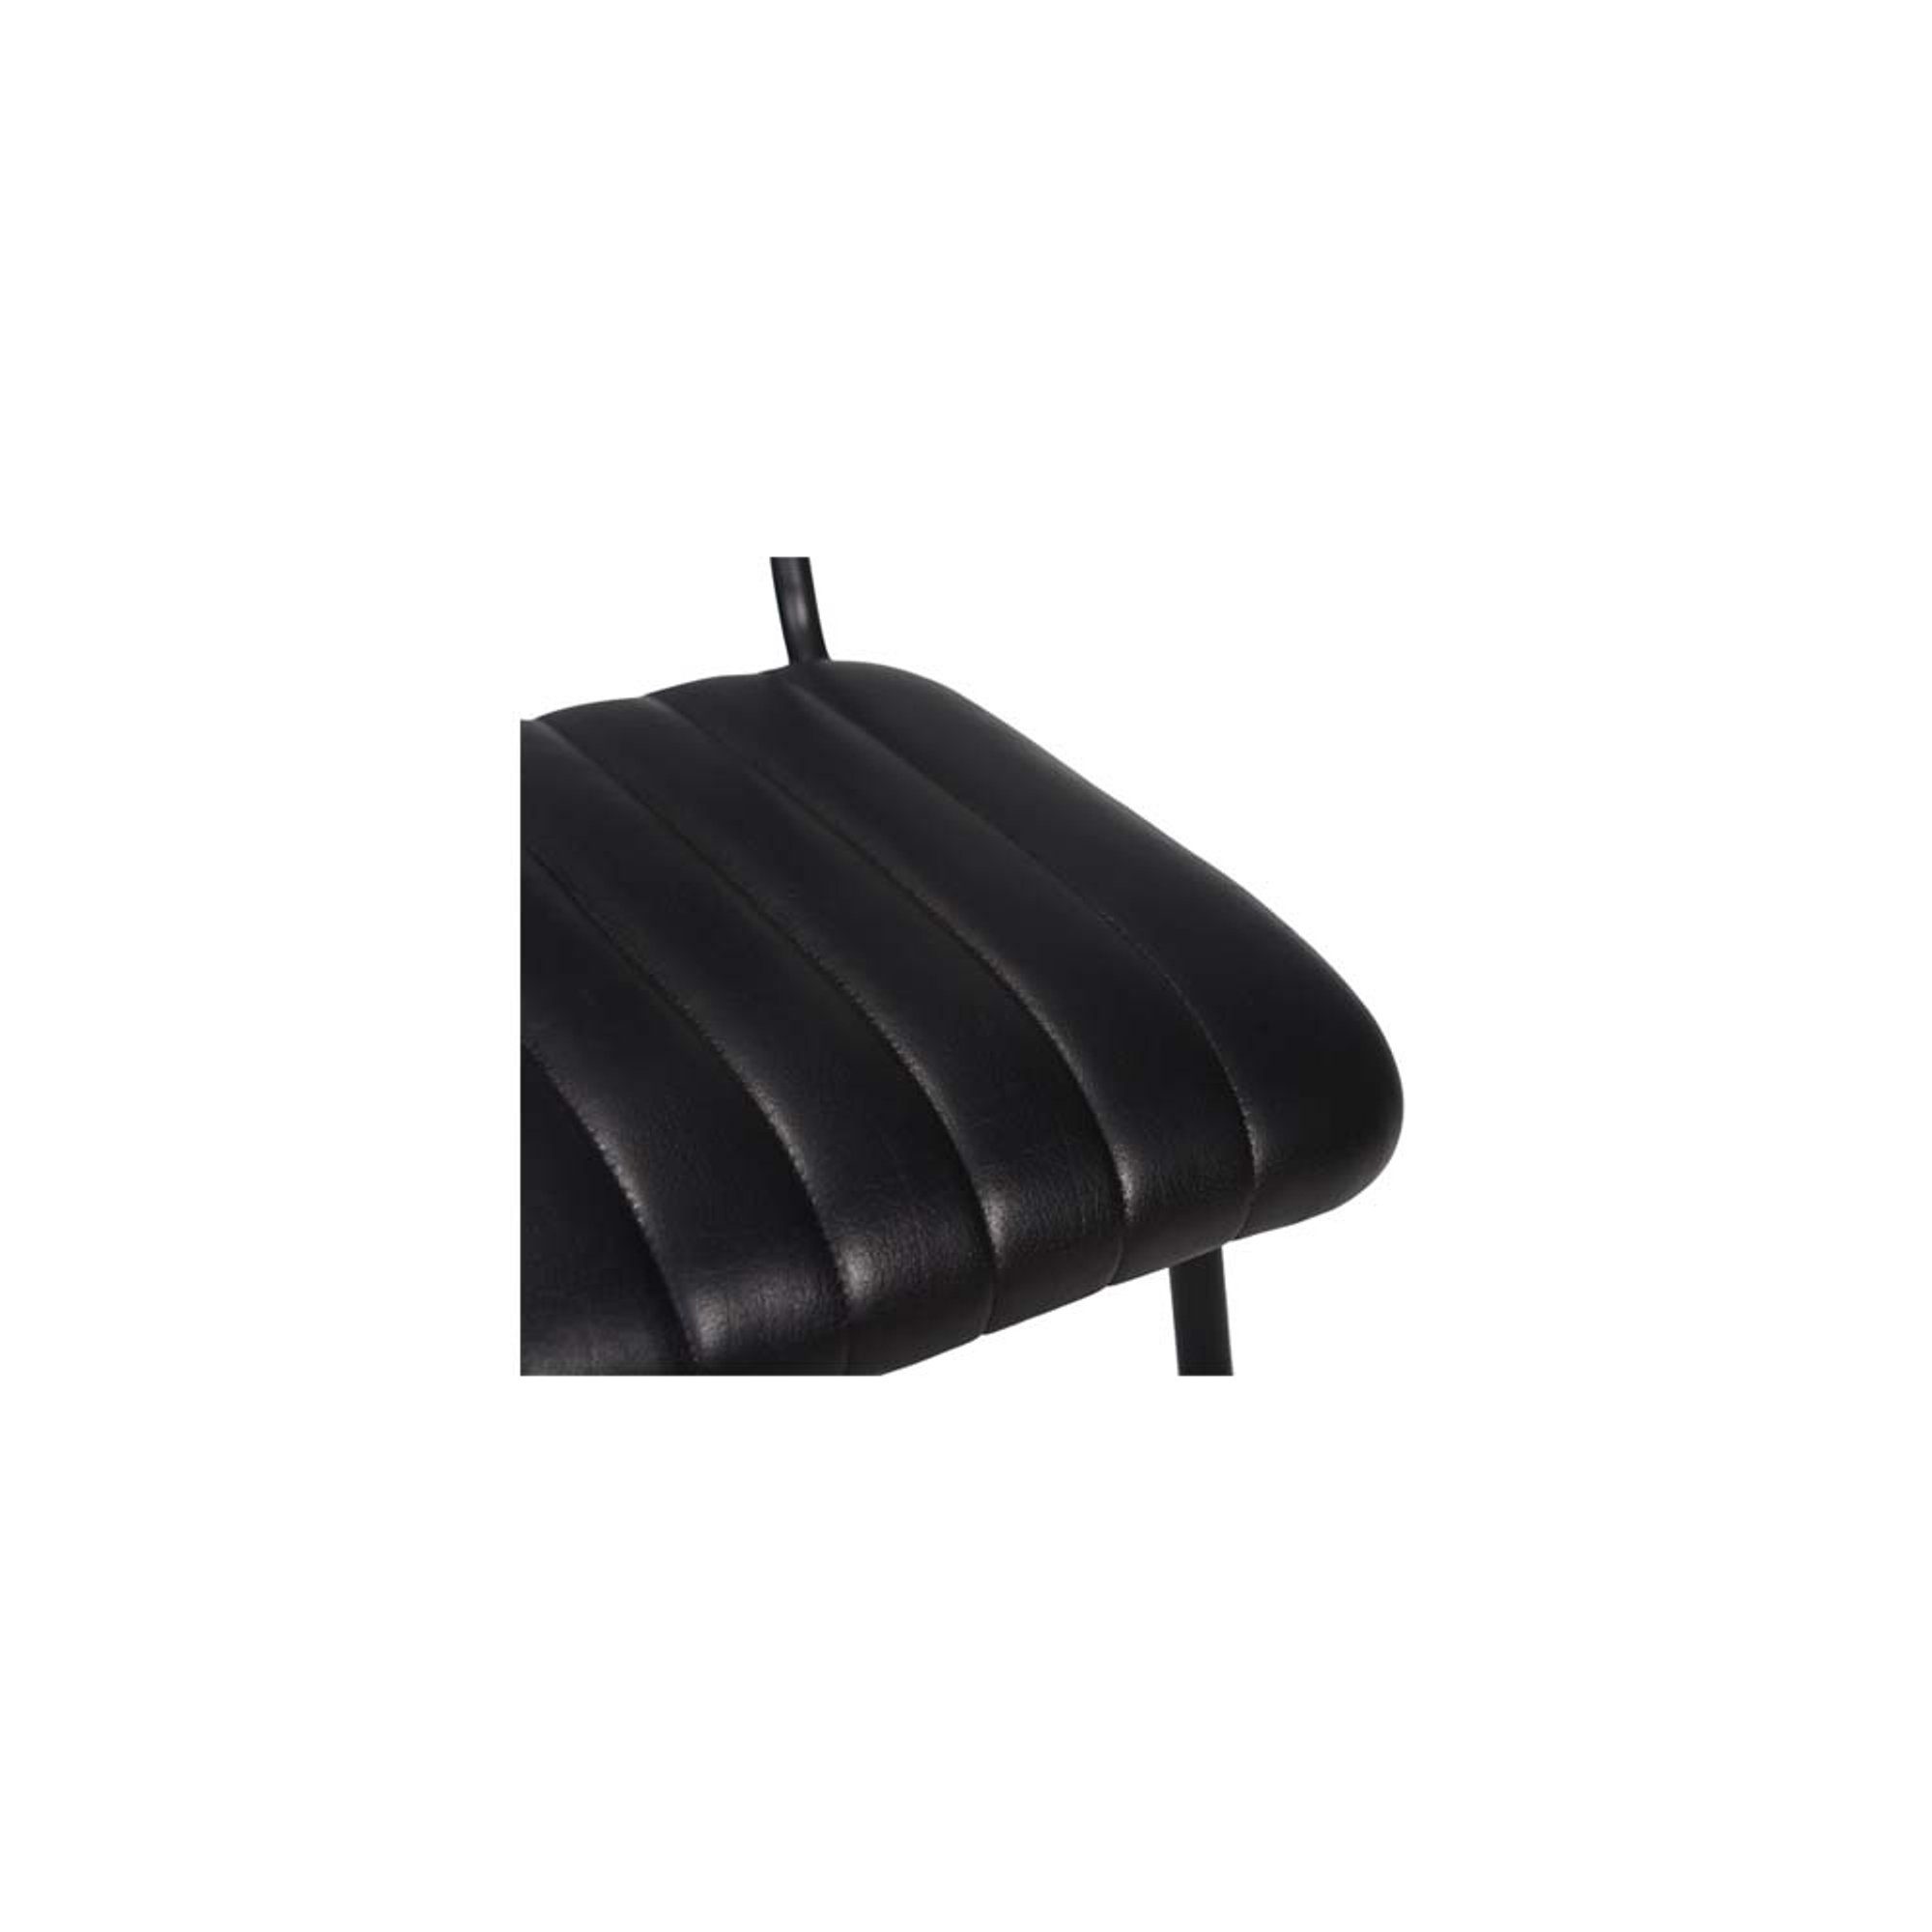 Pc I Black 2 Chair Stuhl Mugello Leather Stuhl Catchers